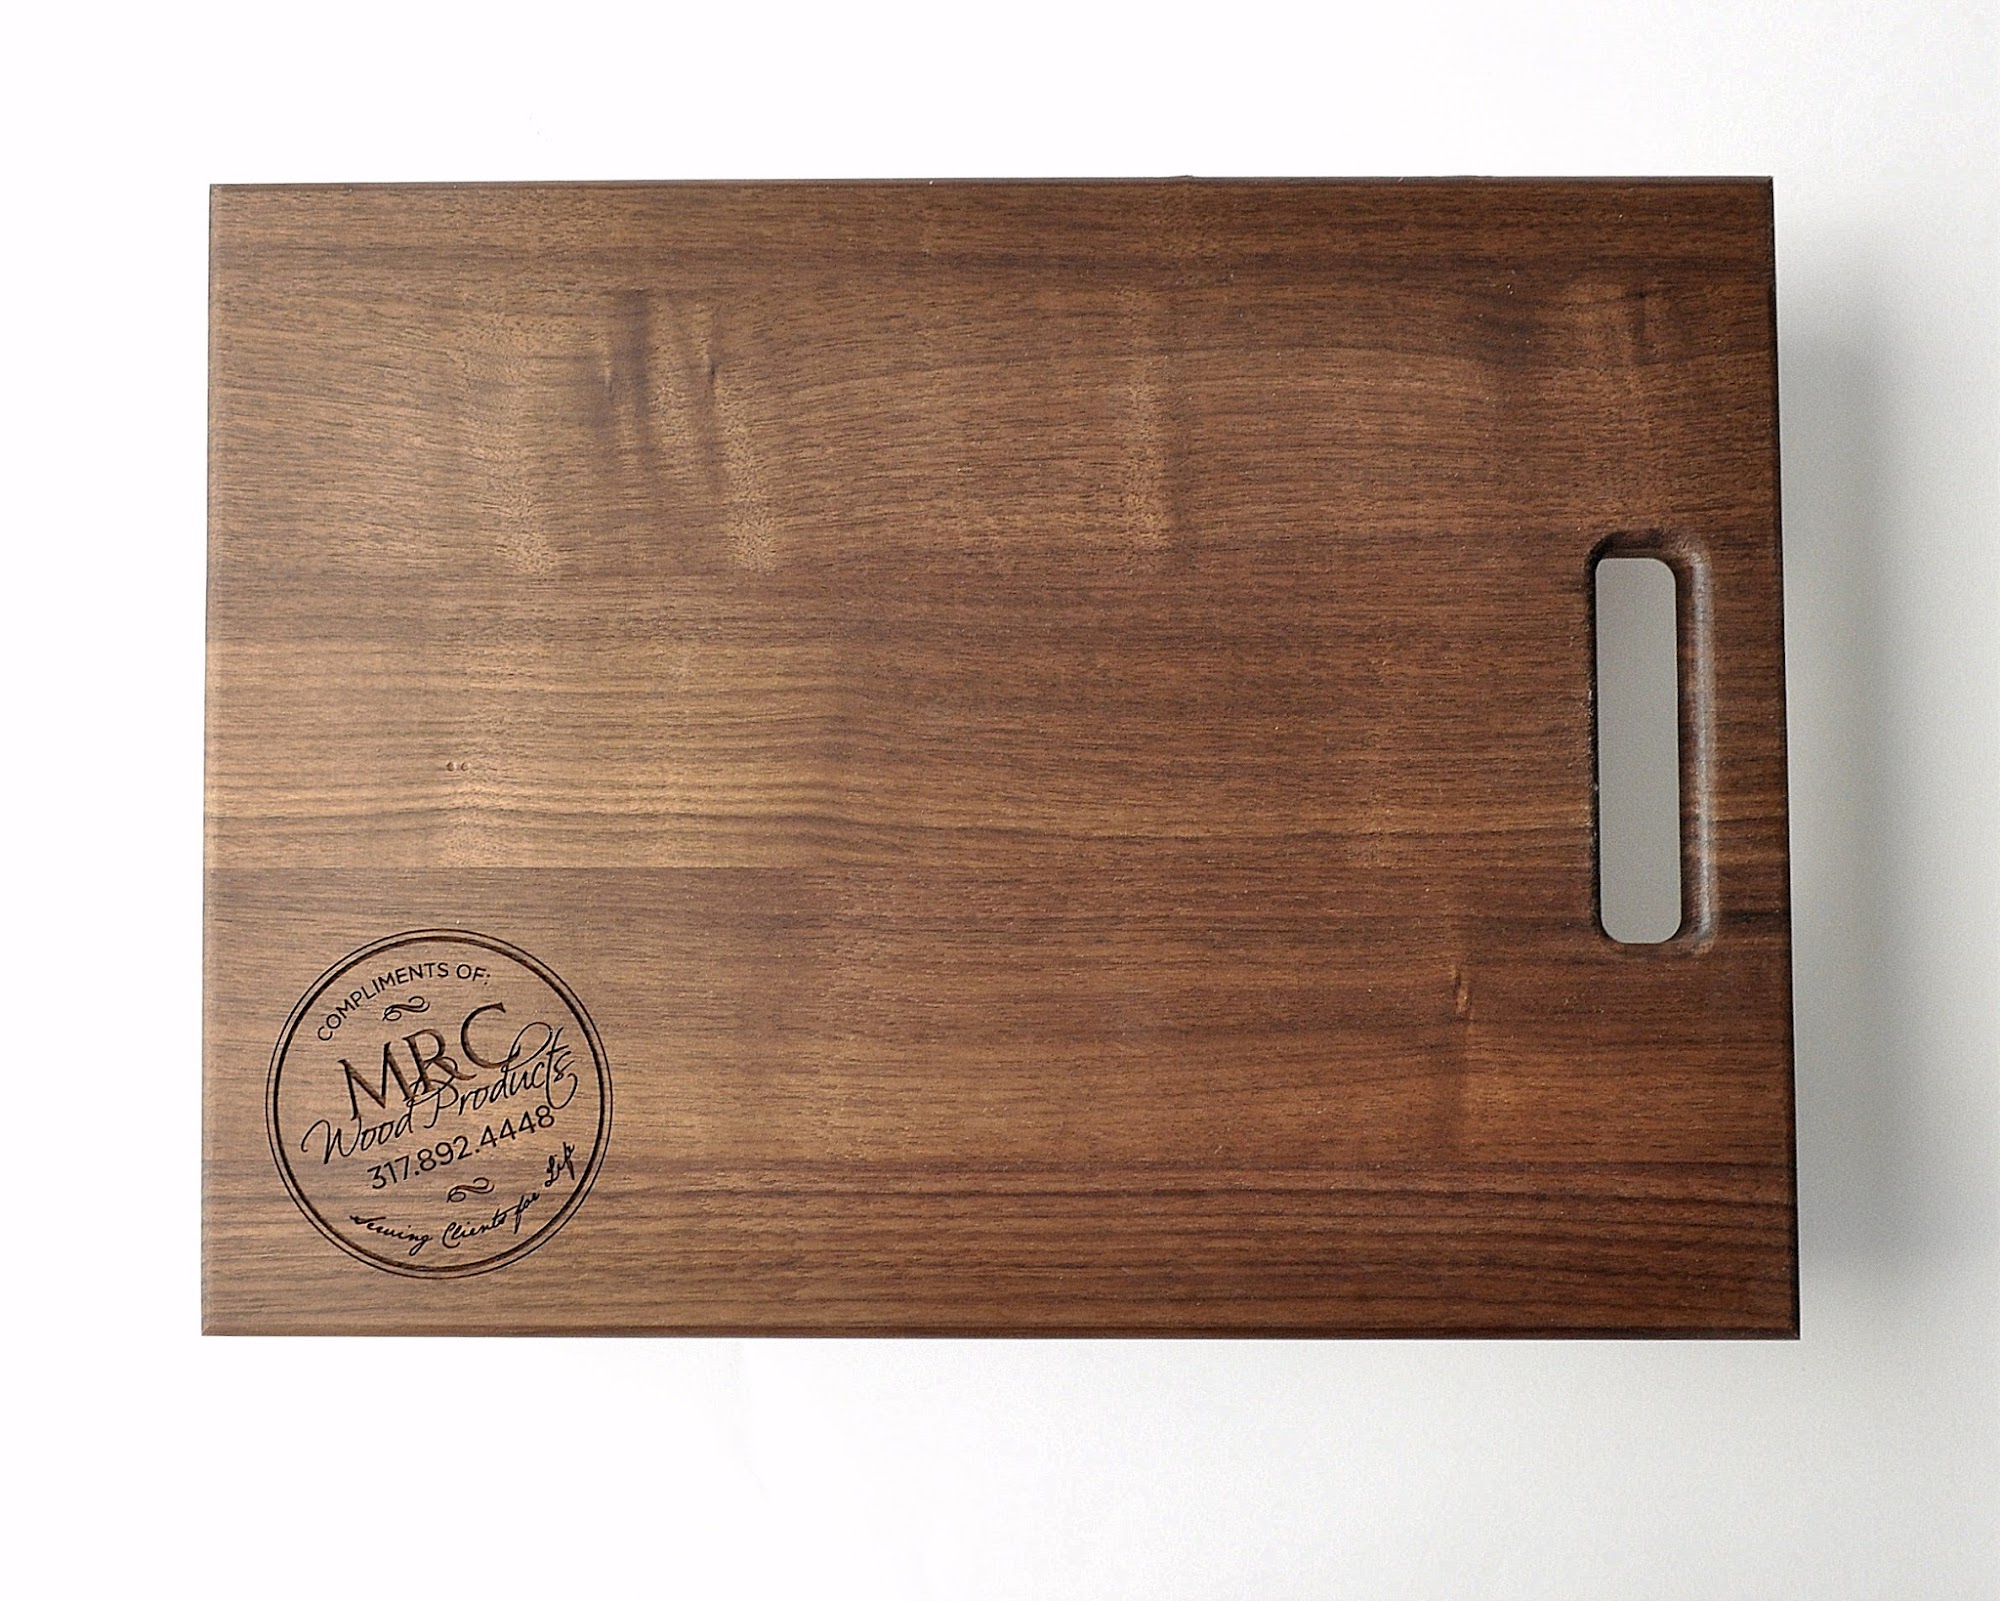 MRC Wood Products